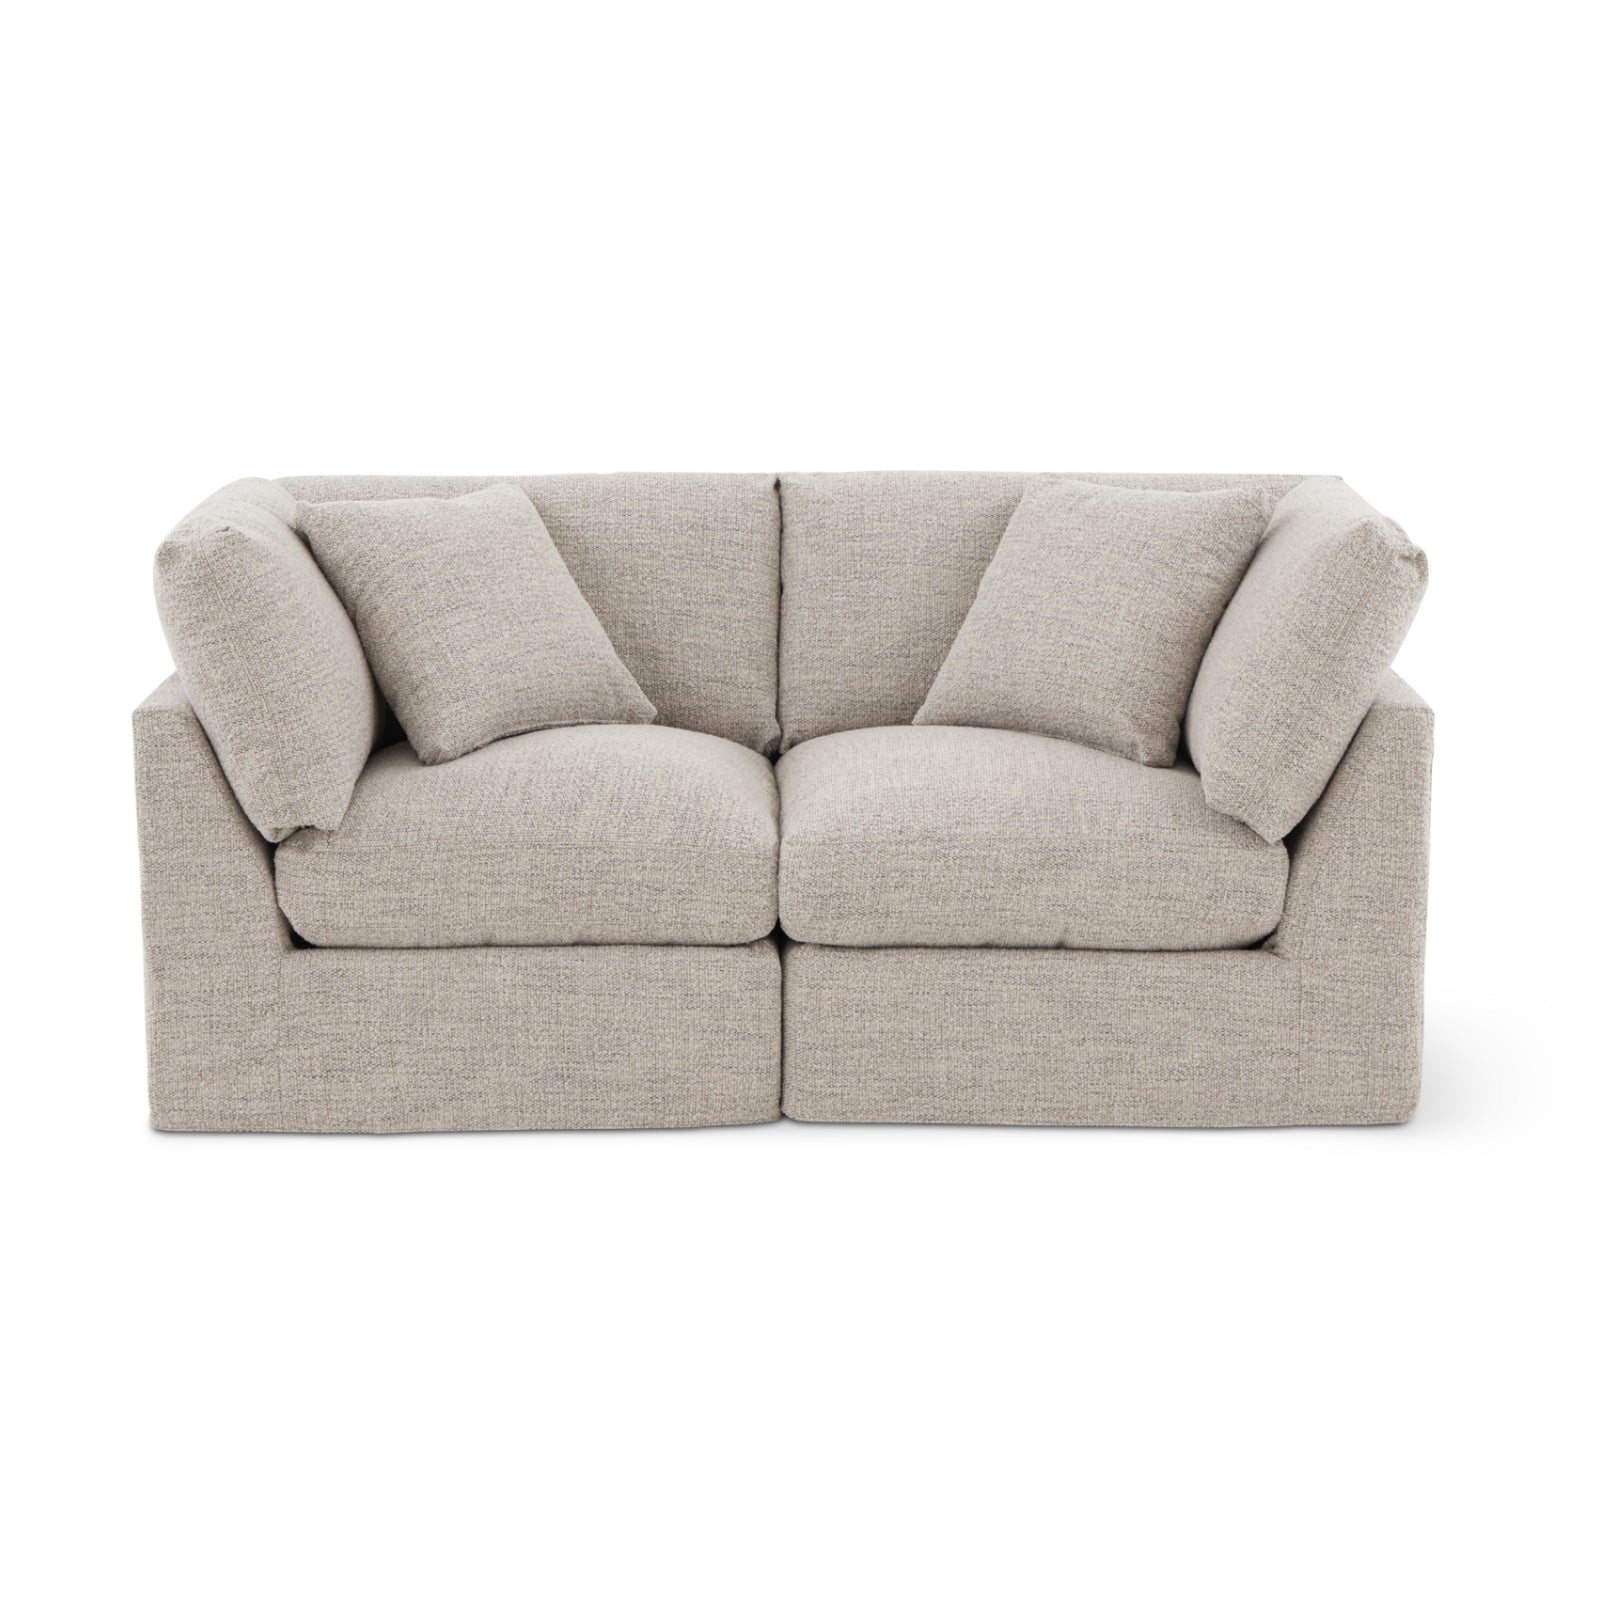 Get Together™ 2-Piece Modular Sofa, Large, Oatmeal - Image 11